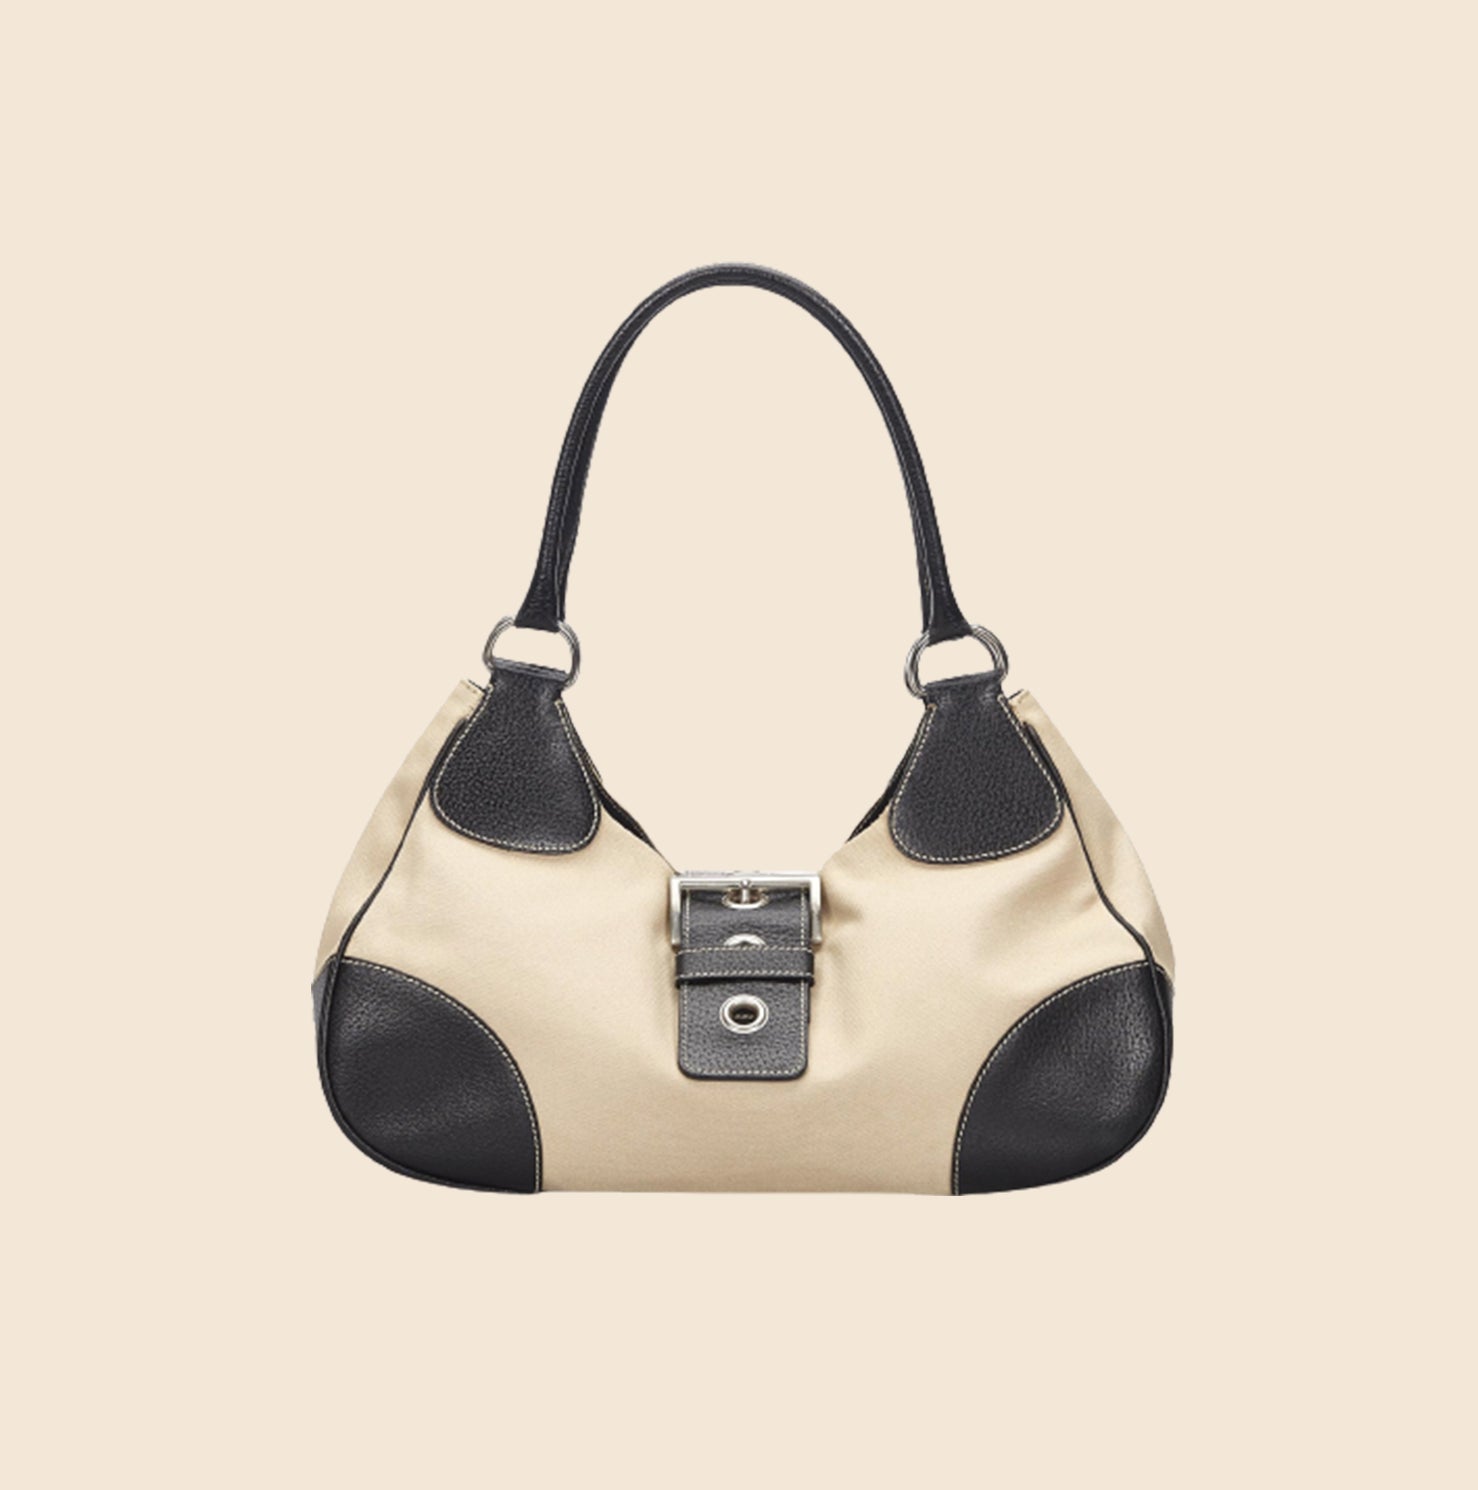 Prada Women's Leather Shoulder Bag